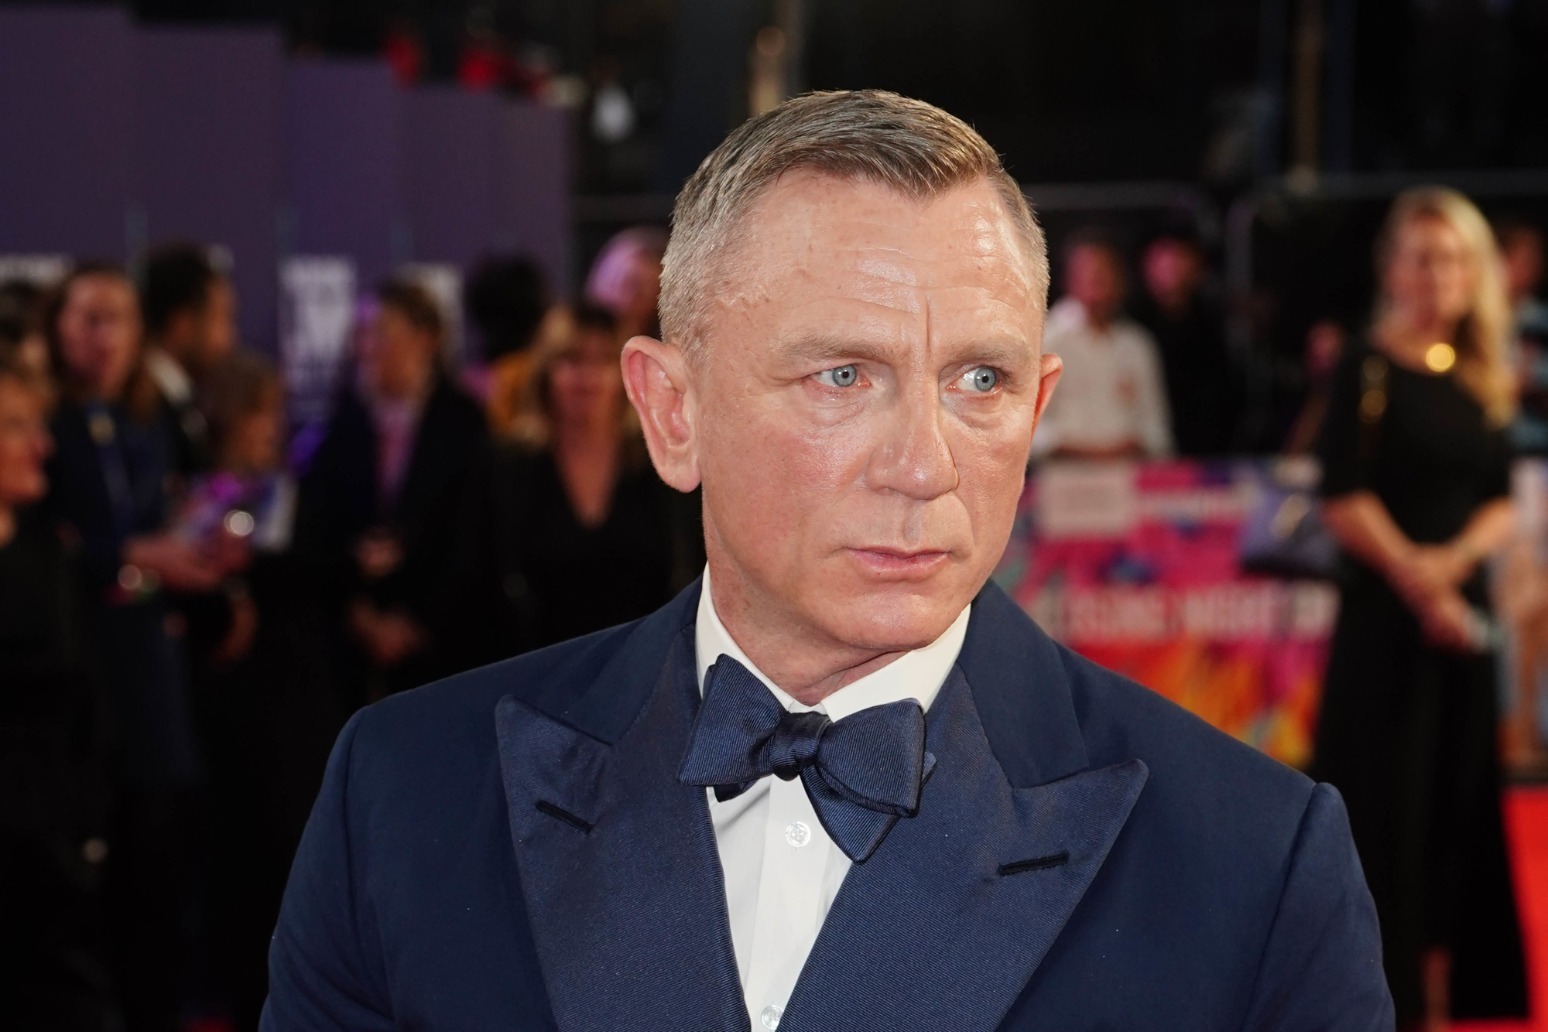 James Bond actor Daniel Craig set to receive same honour as 007 